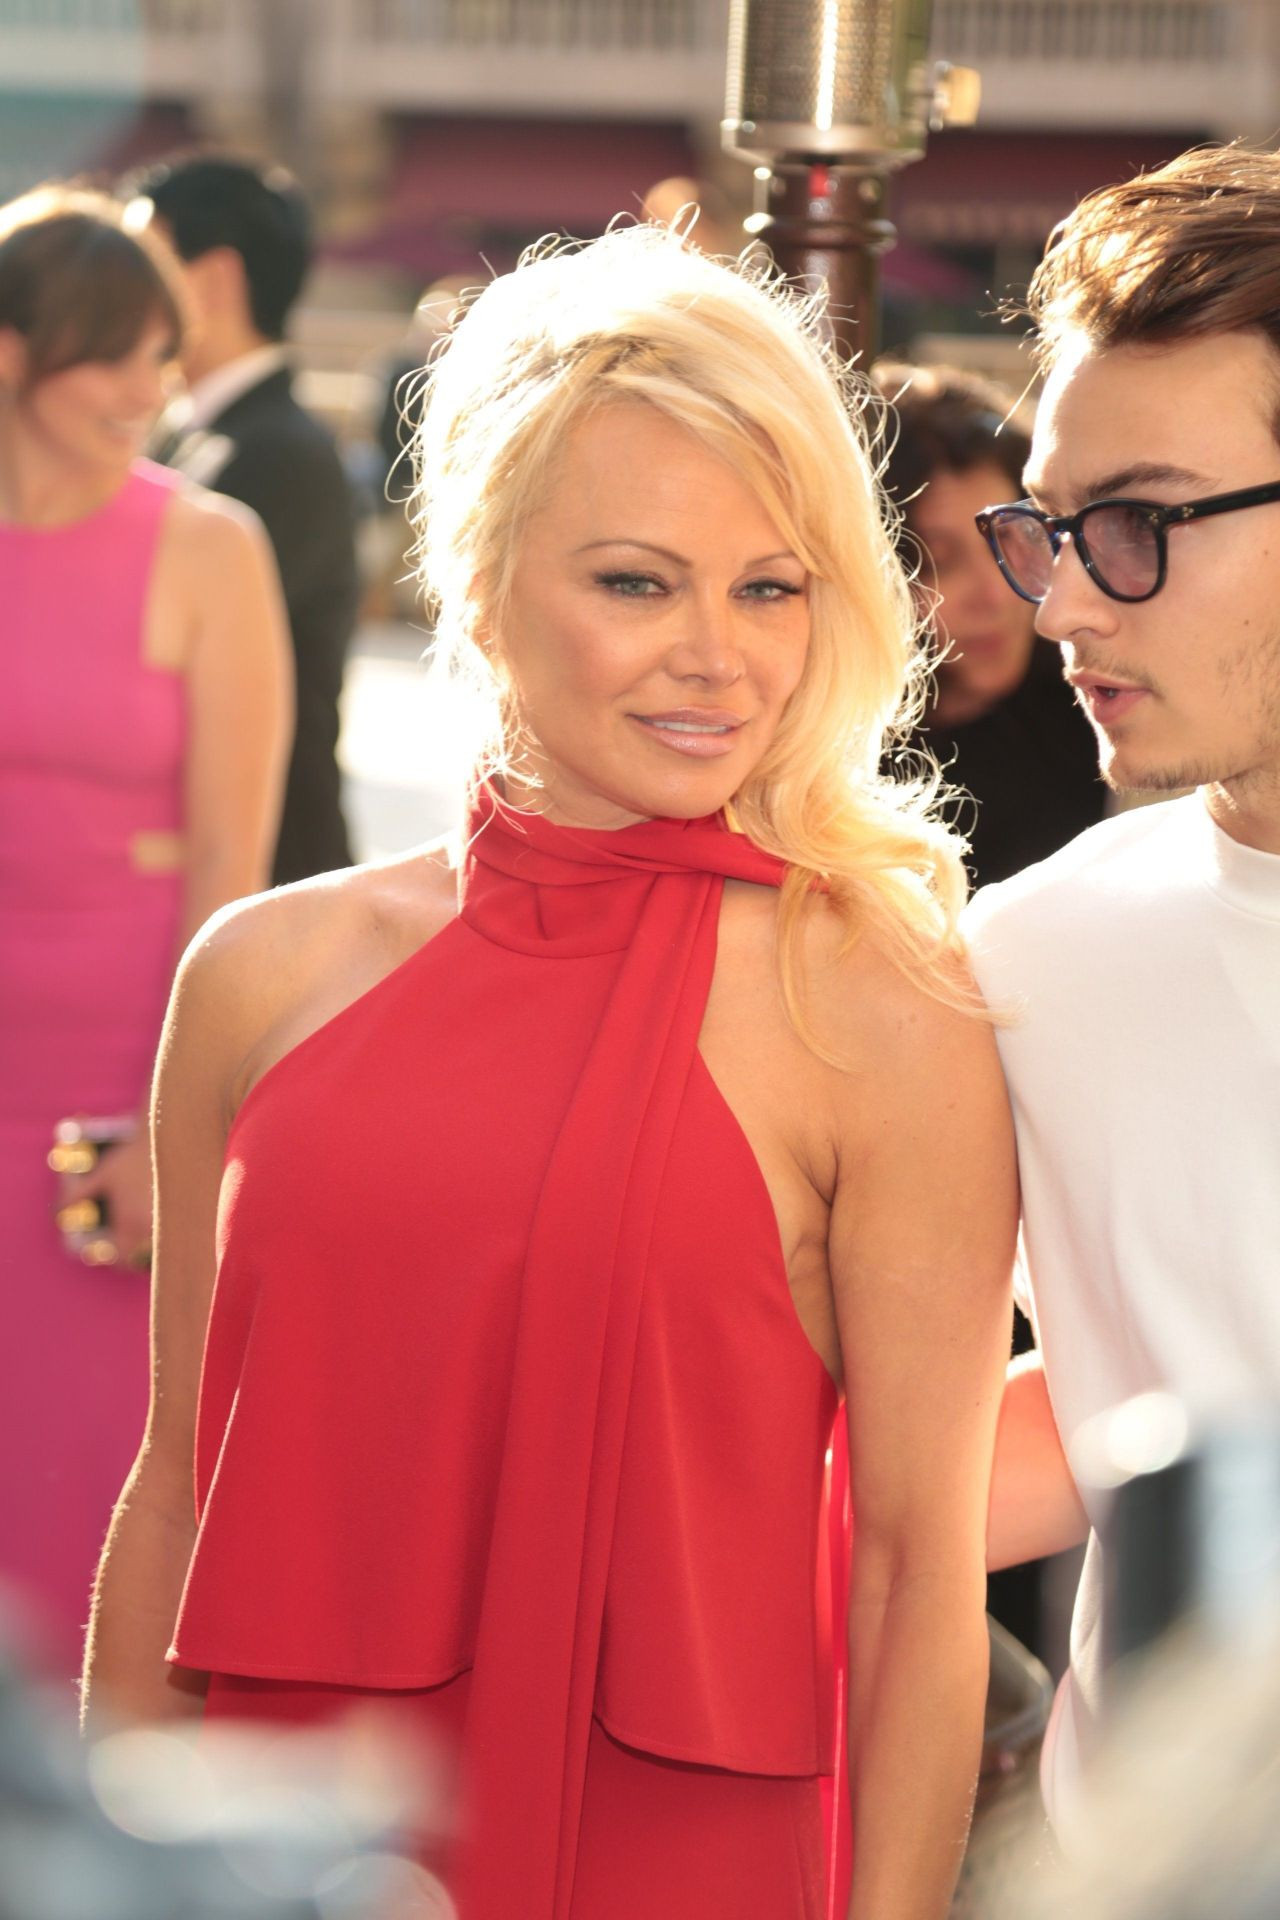 Памела Андерсон (Pamela Anderson)